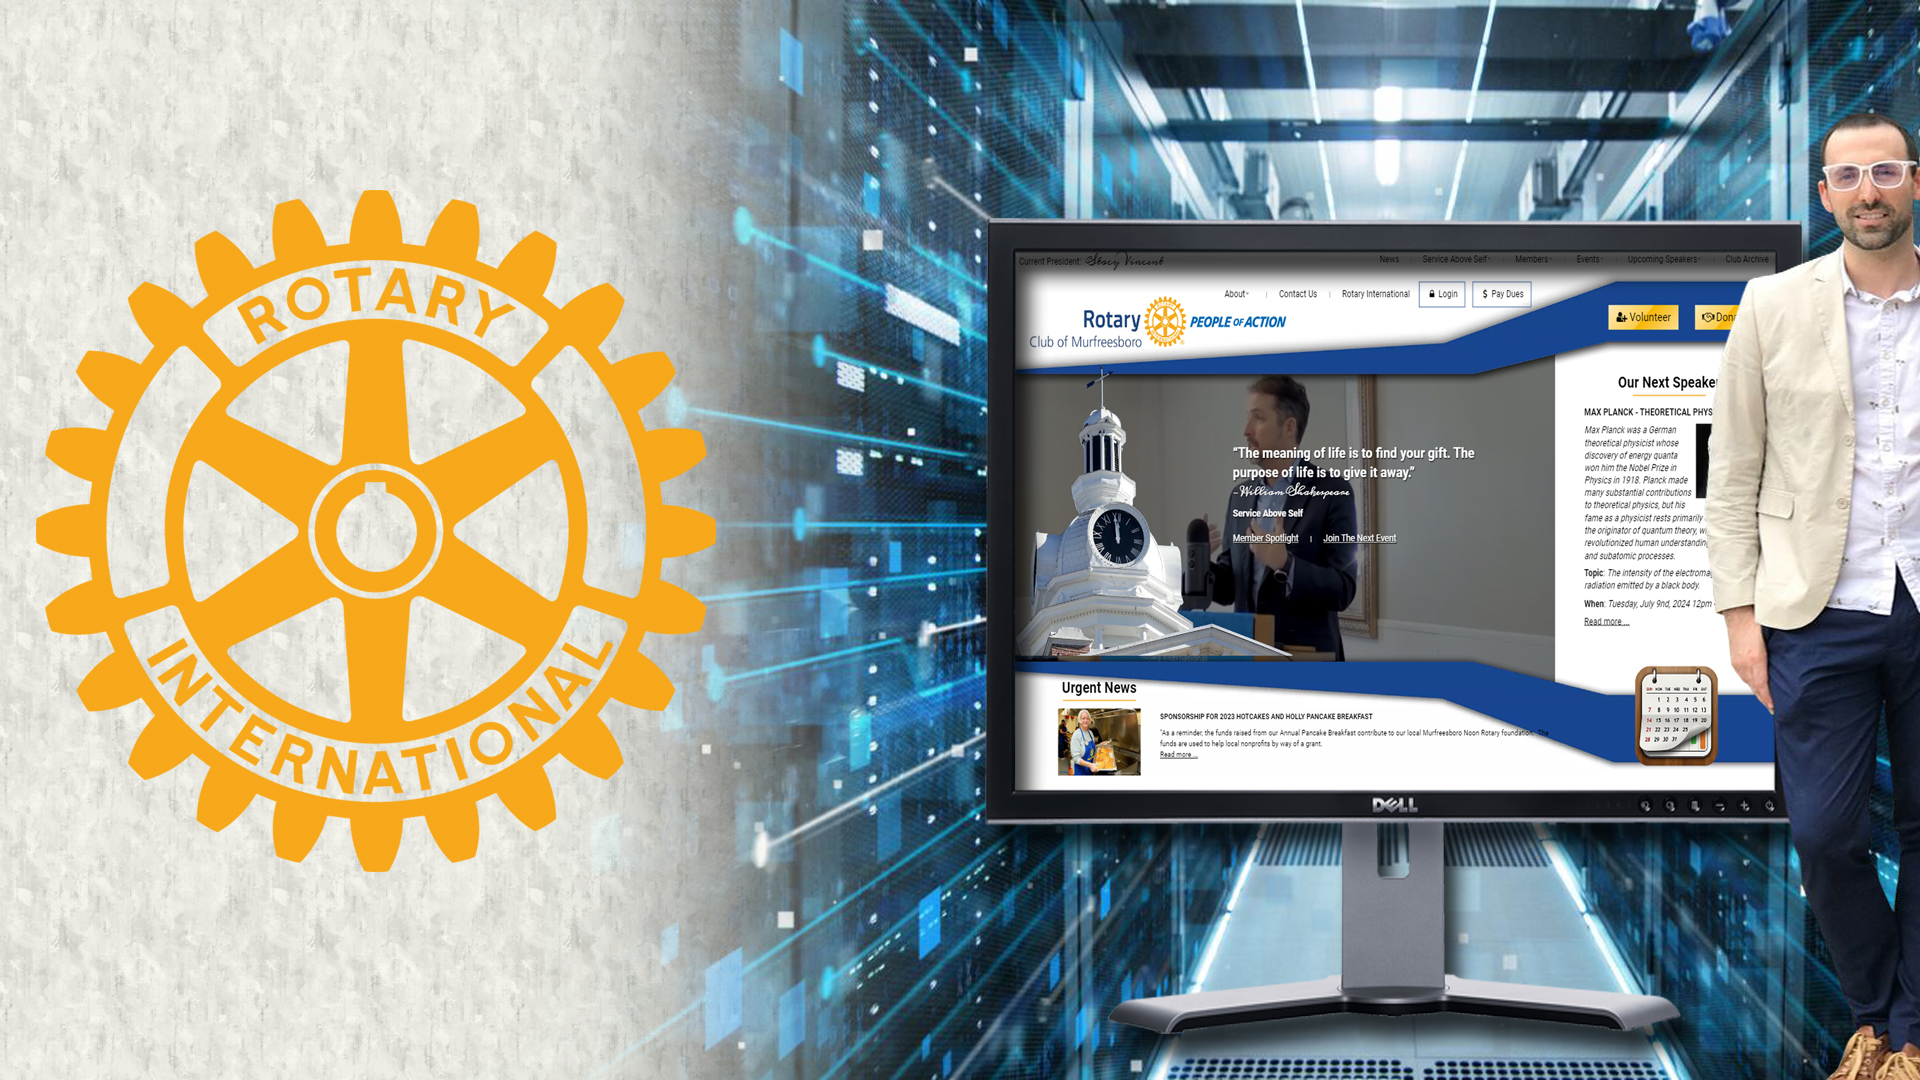 Rotarian Andy Kauffman Website Reveal